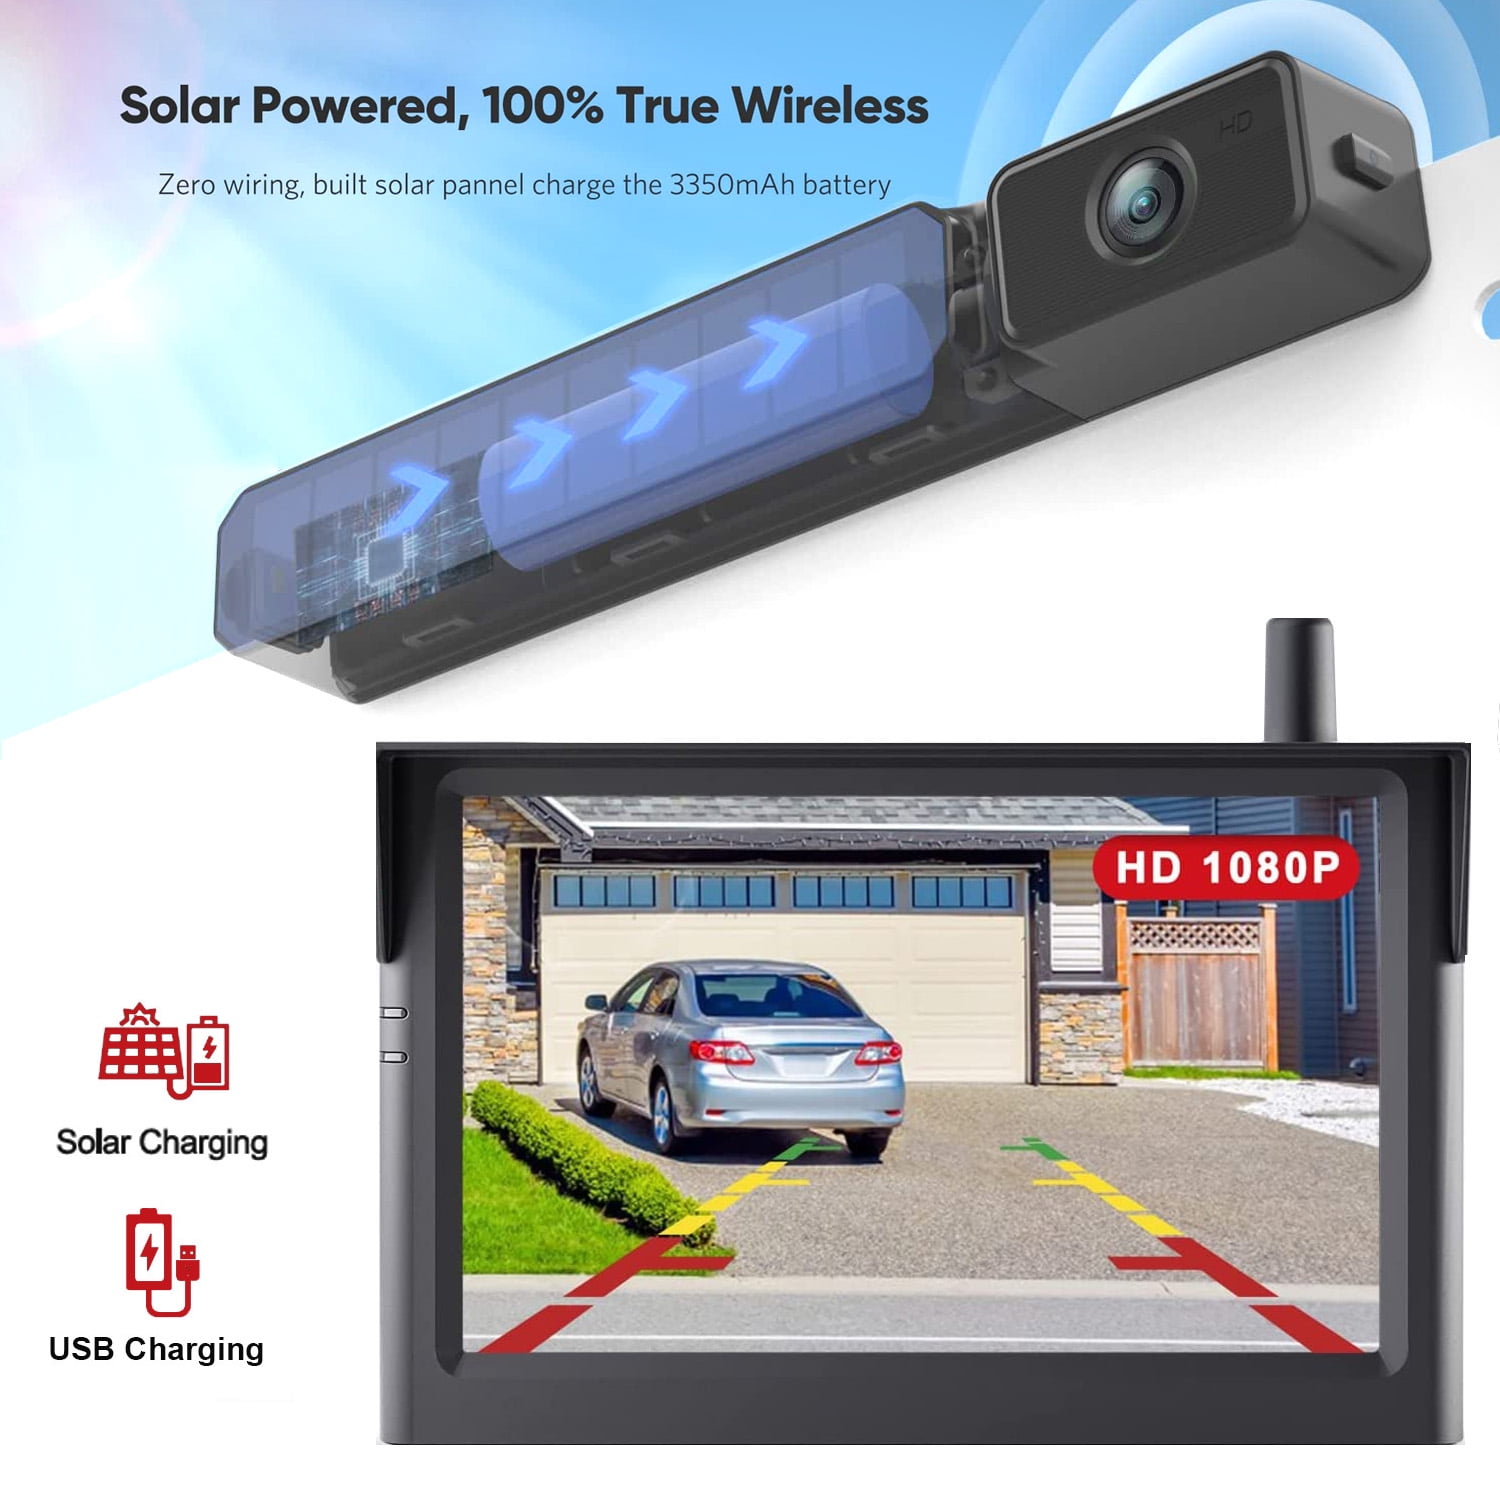 Foxpark Solar Wireless Backup Camera for Campervans 2 Channels RV Reverse  Camera, Travel Trailer Back Up Camera Systems for Van & Car (Solar 3）